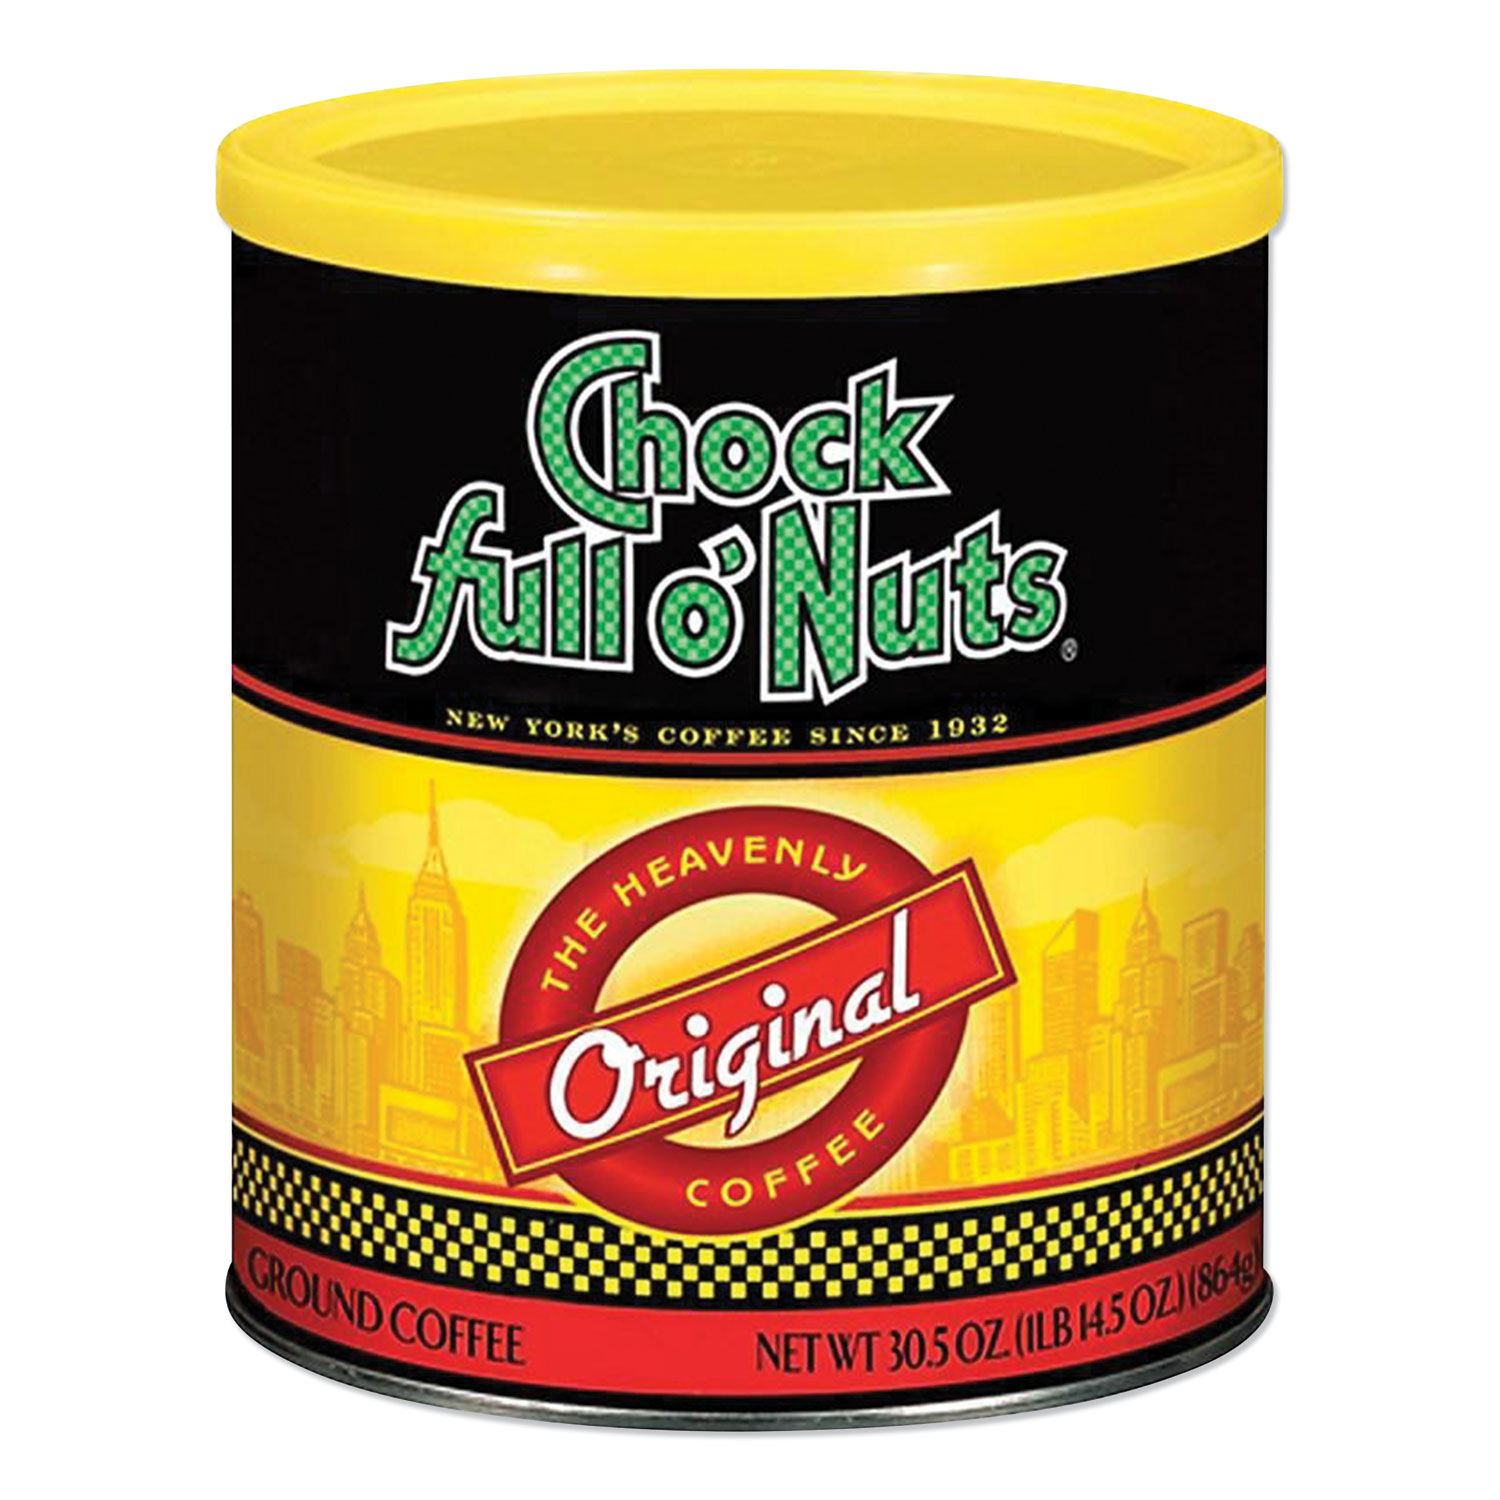 Chock full oNuts Original Blend Ground Coffee, 30.5 oz